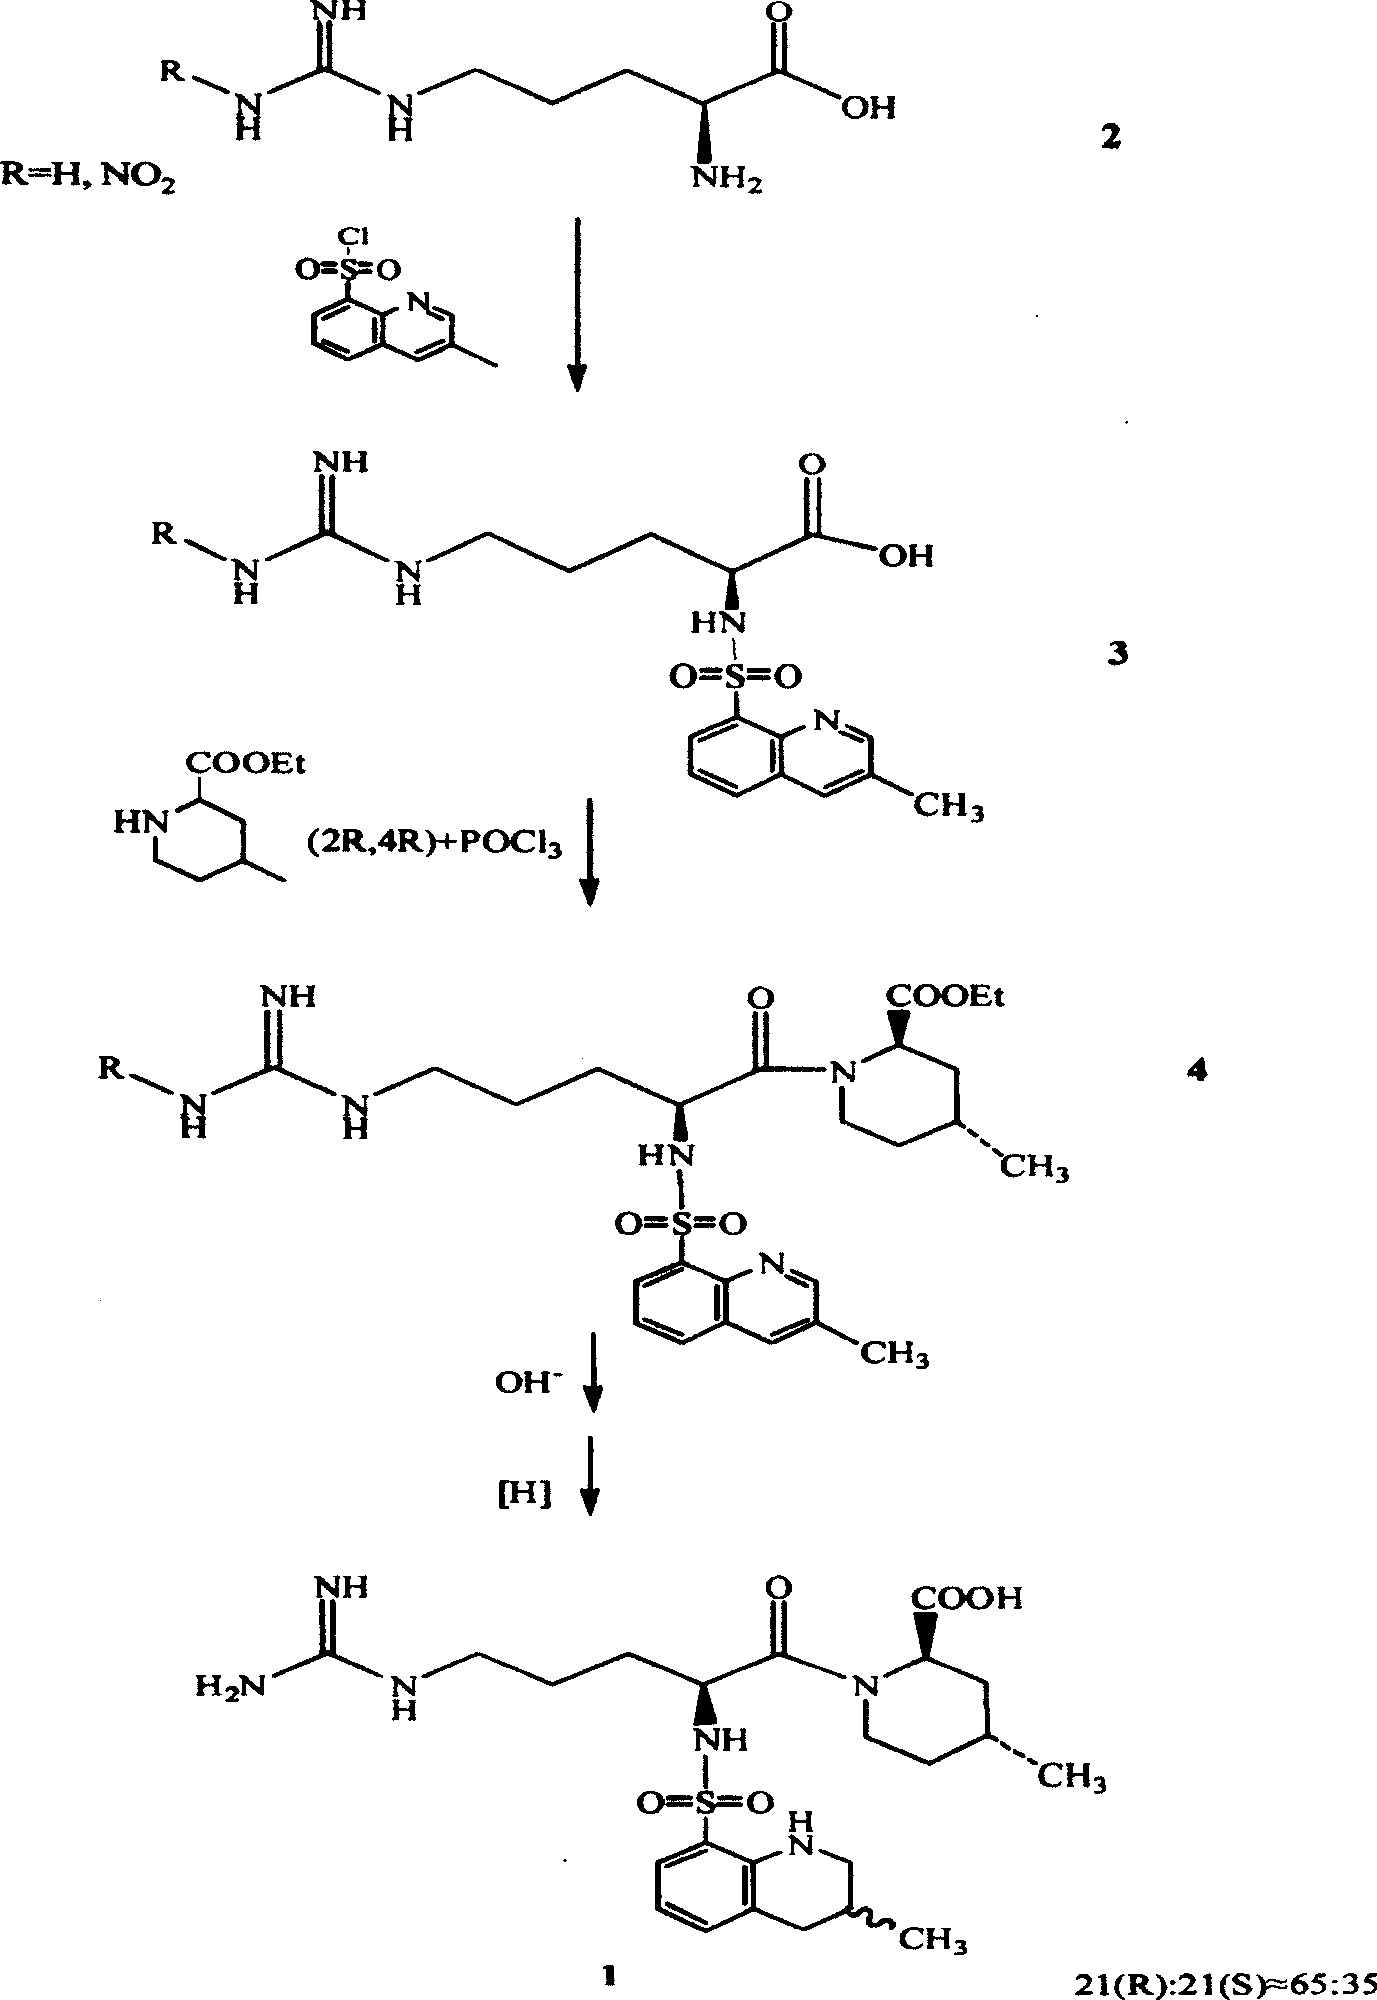 A preparation method of argatroban intermediates